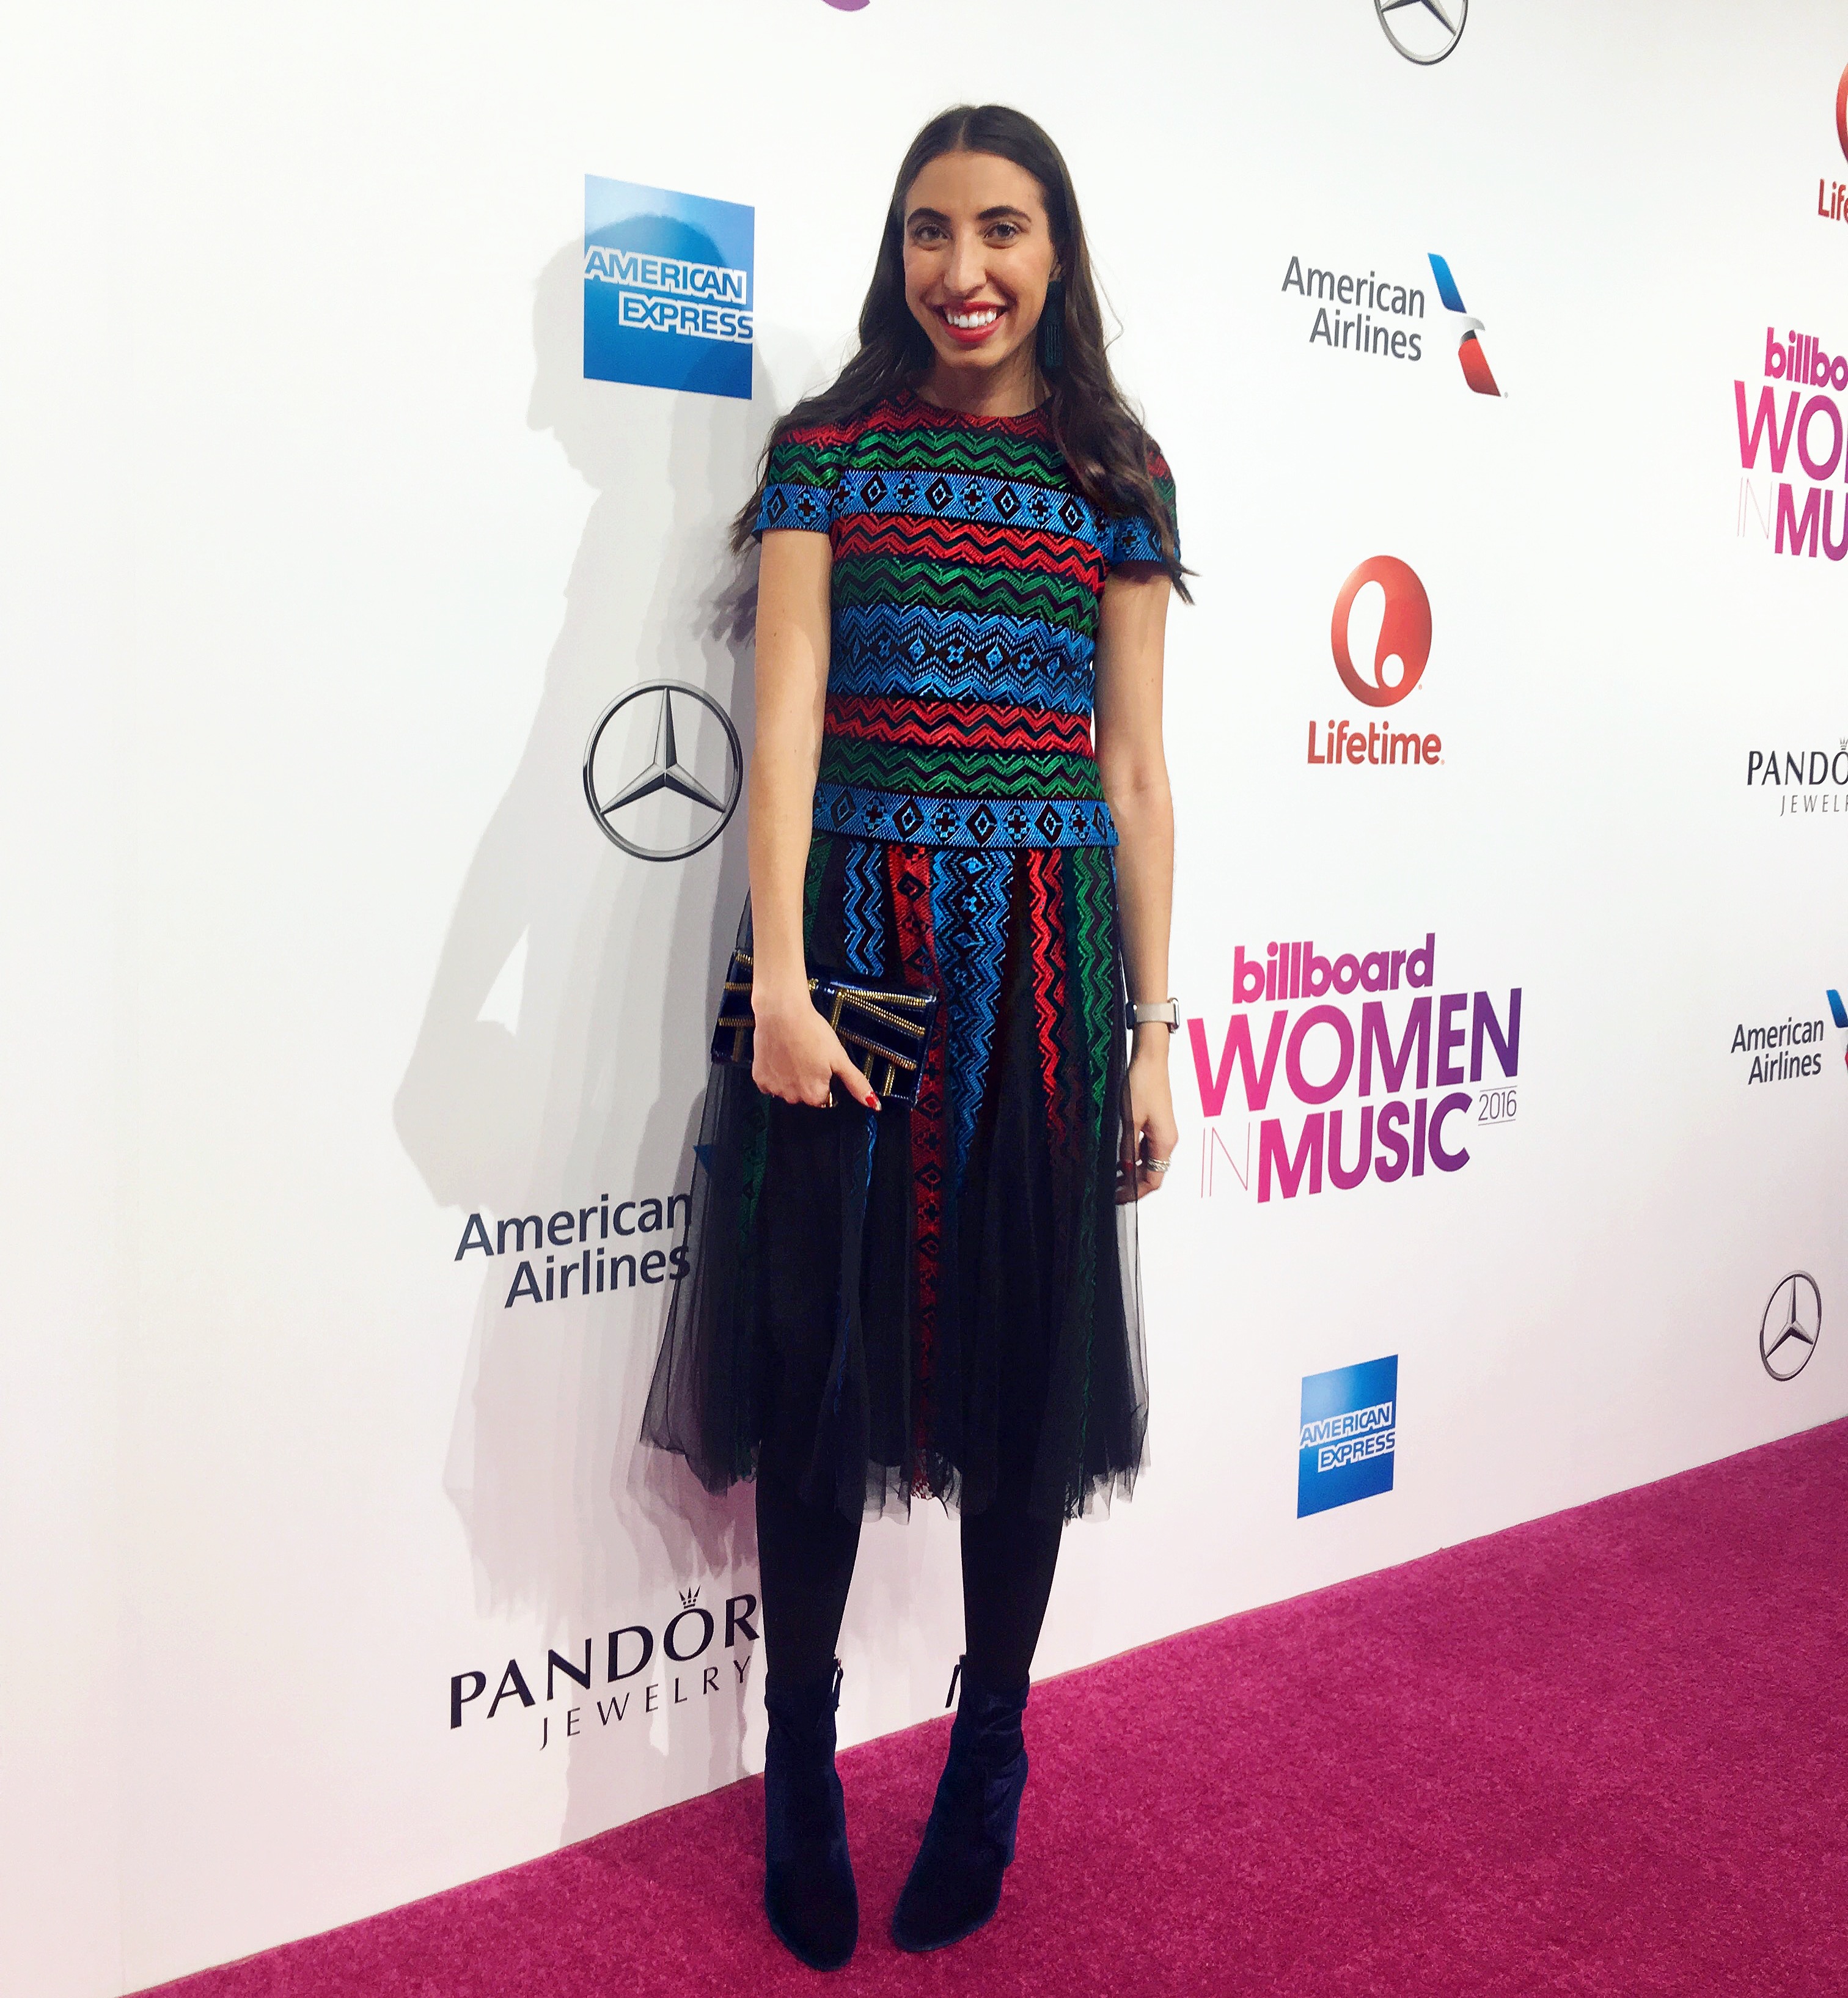 Editor-at-Large Caroline Vazzana Attends the Billboard Women in Music Awards